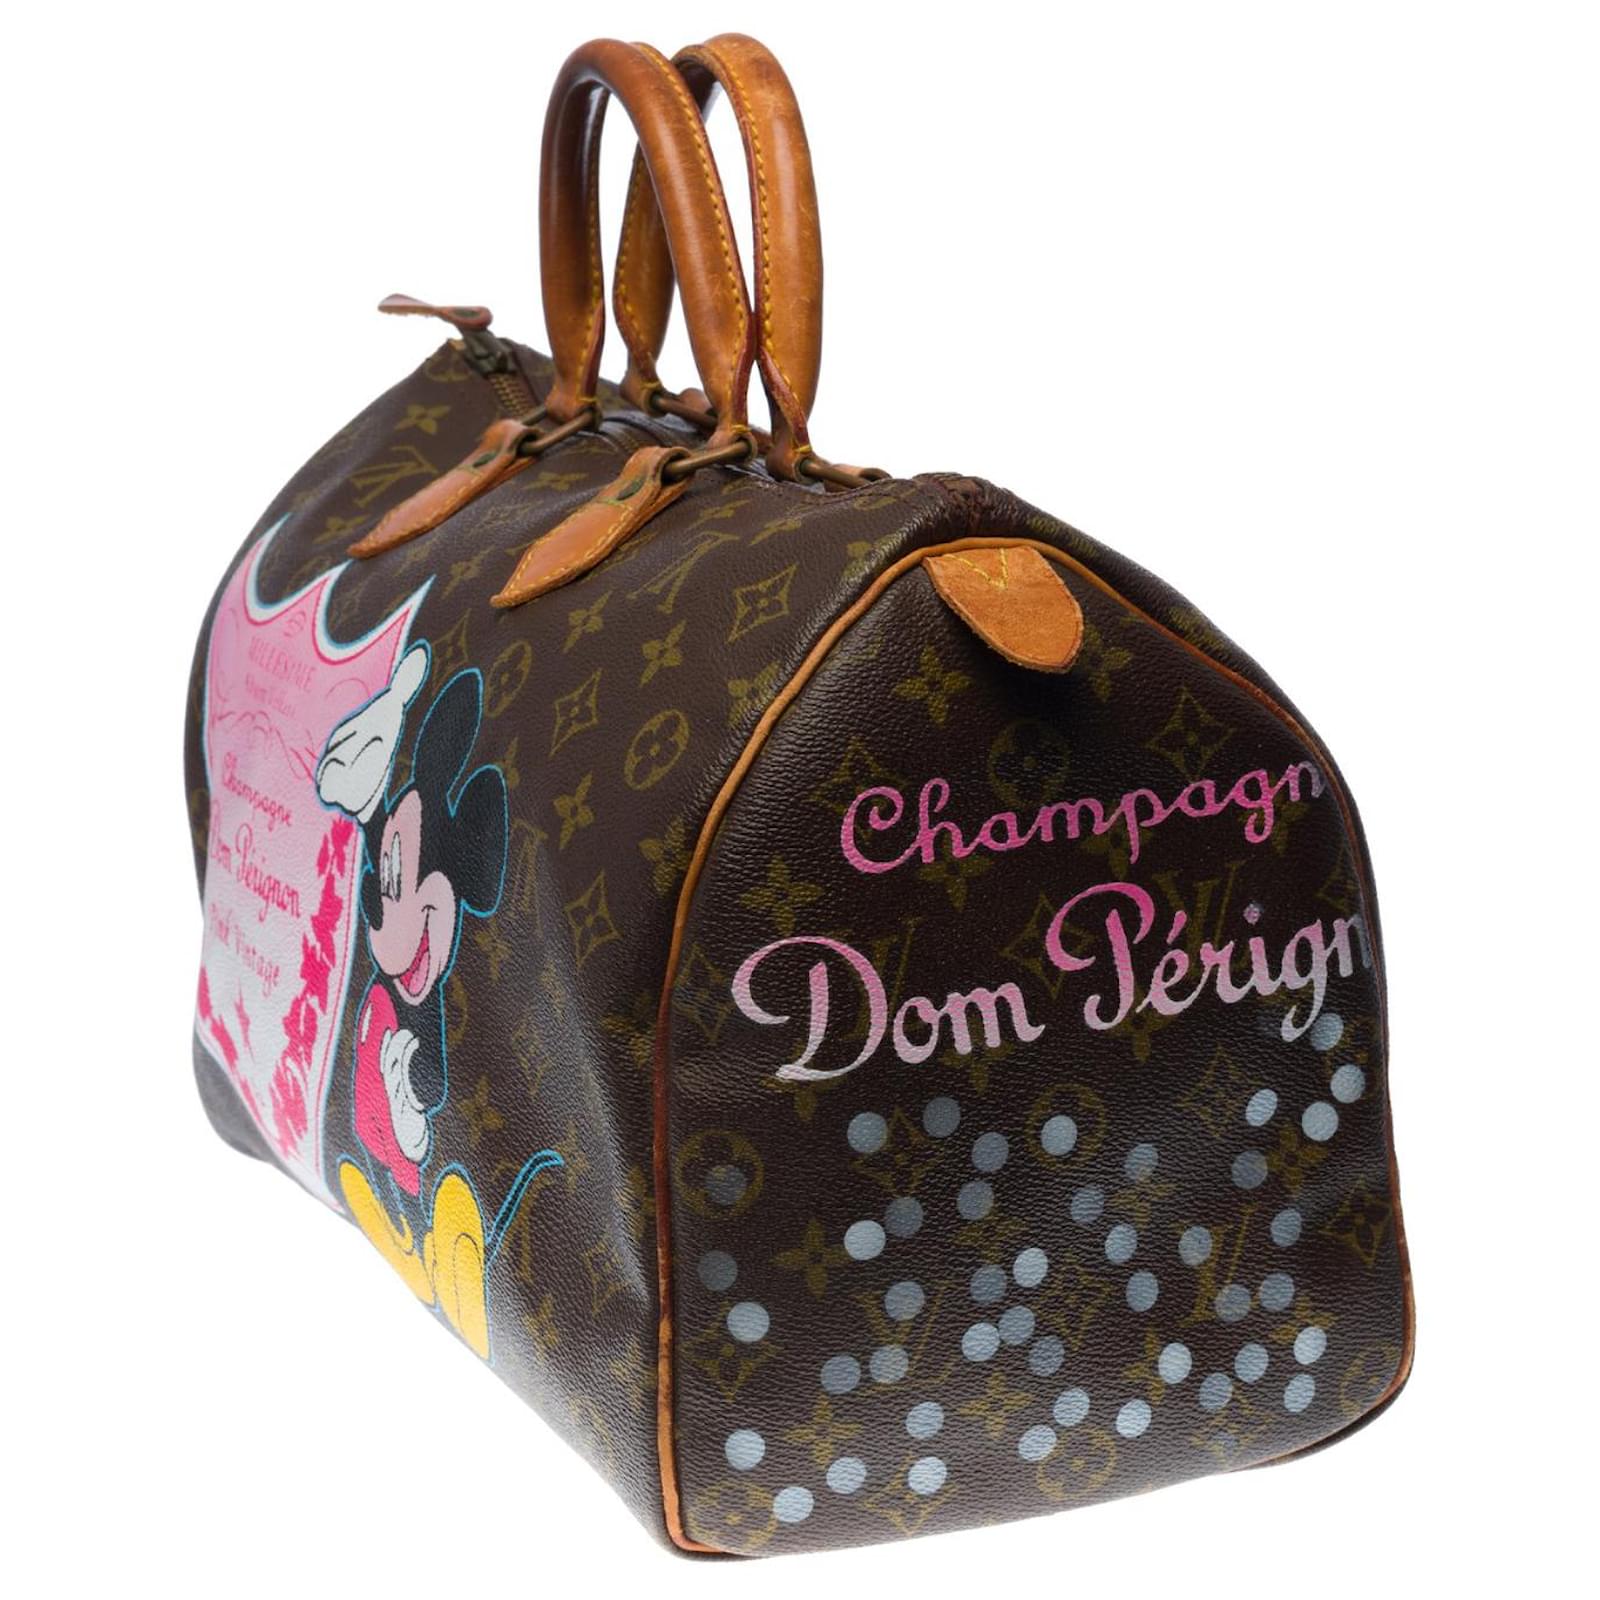 Customized Louis Vuitton Speedy 35 Mickey loves Champagne  handbag